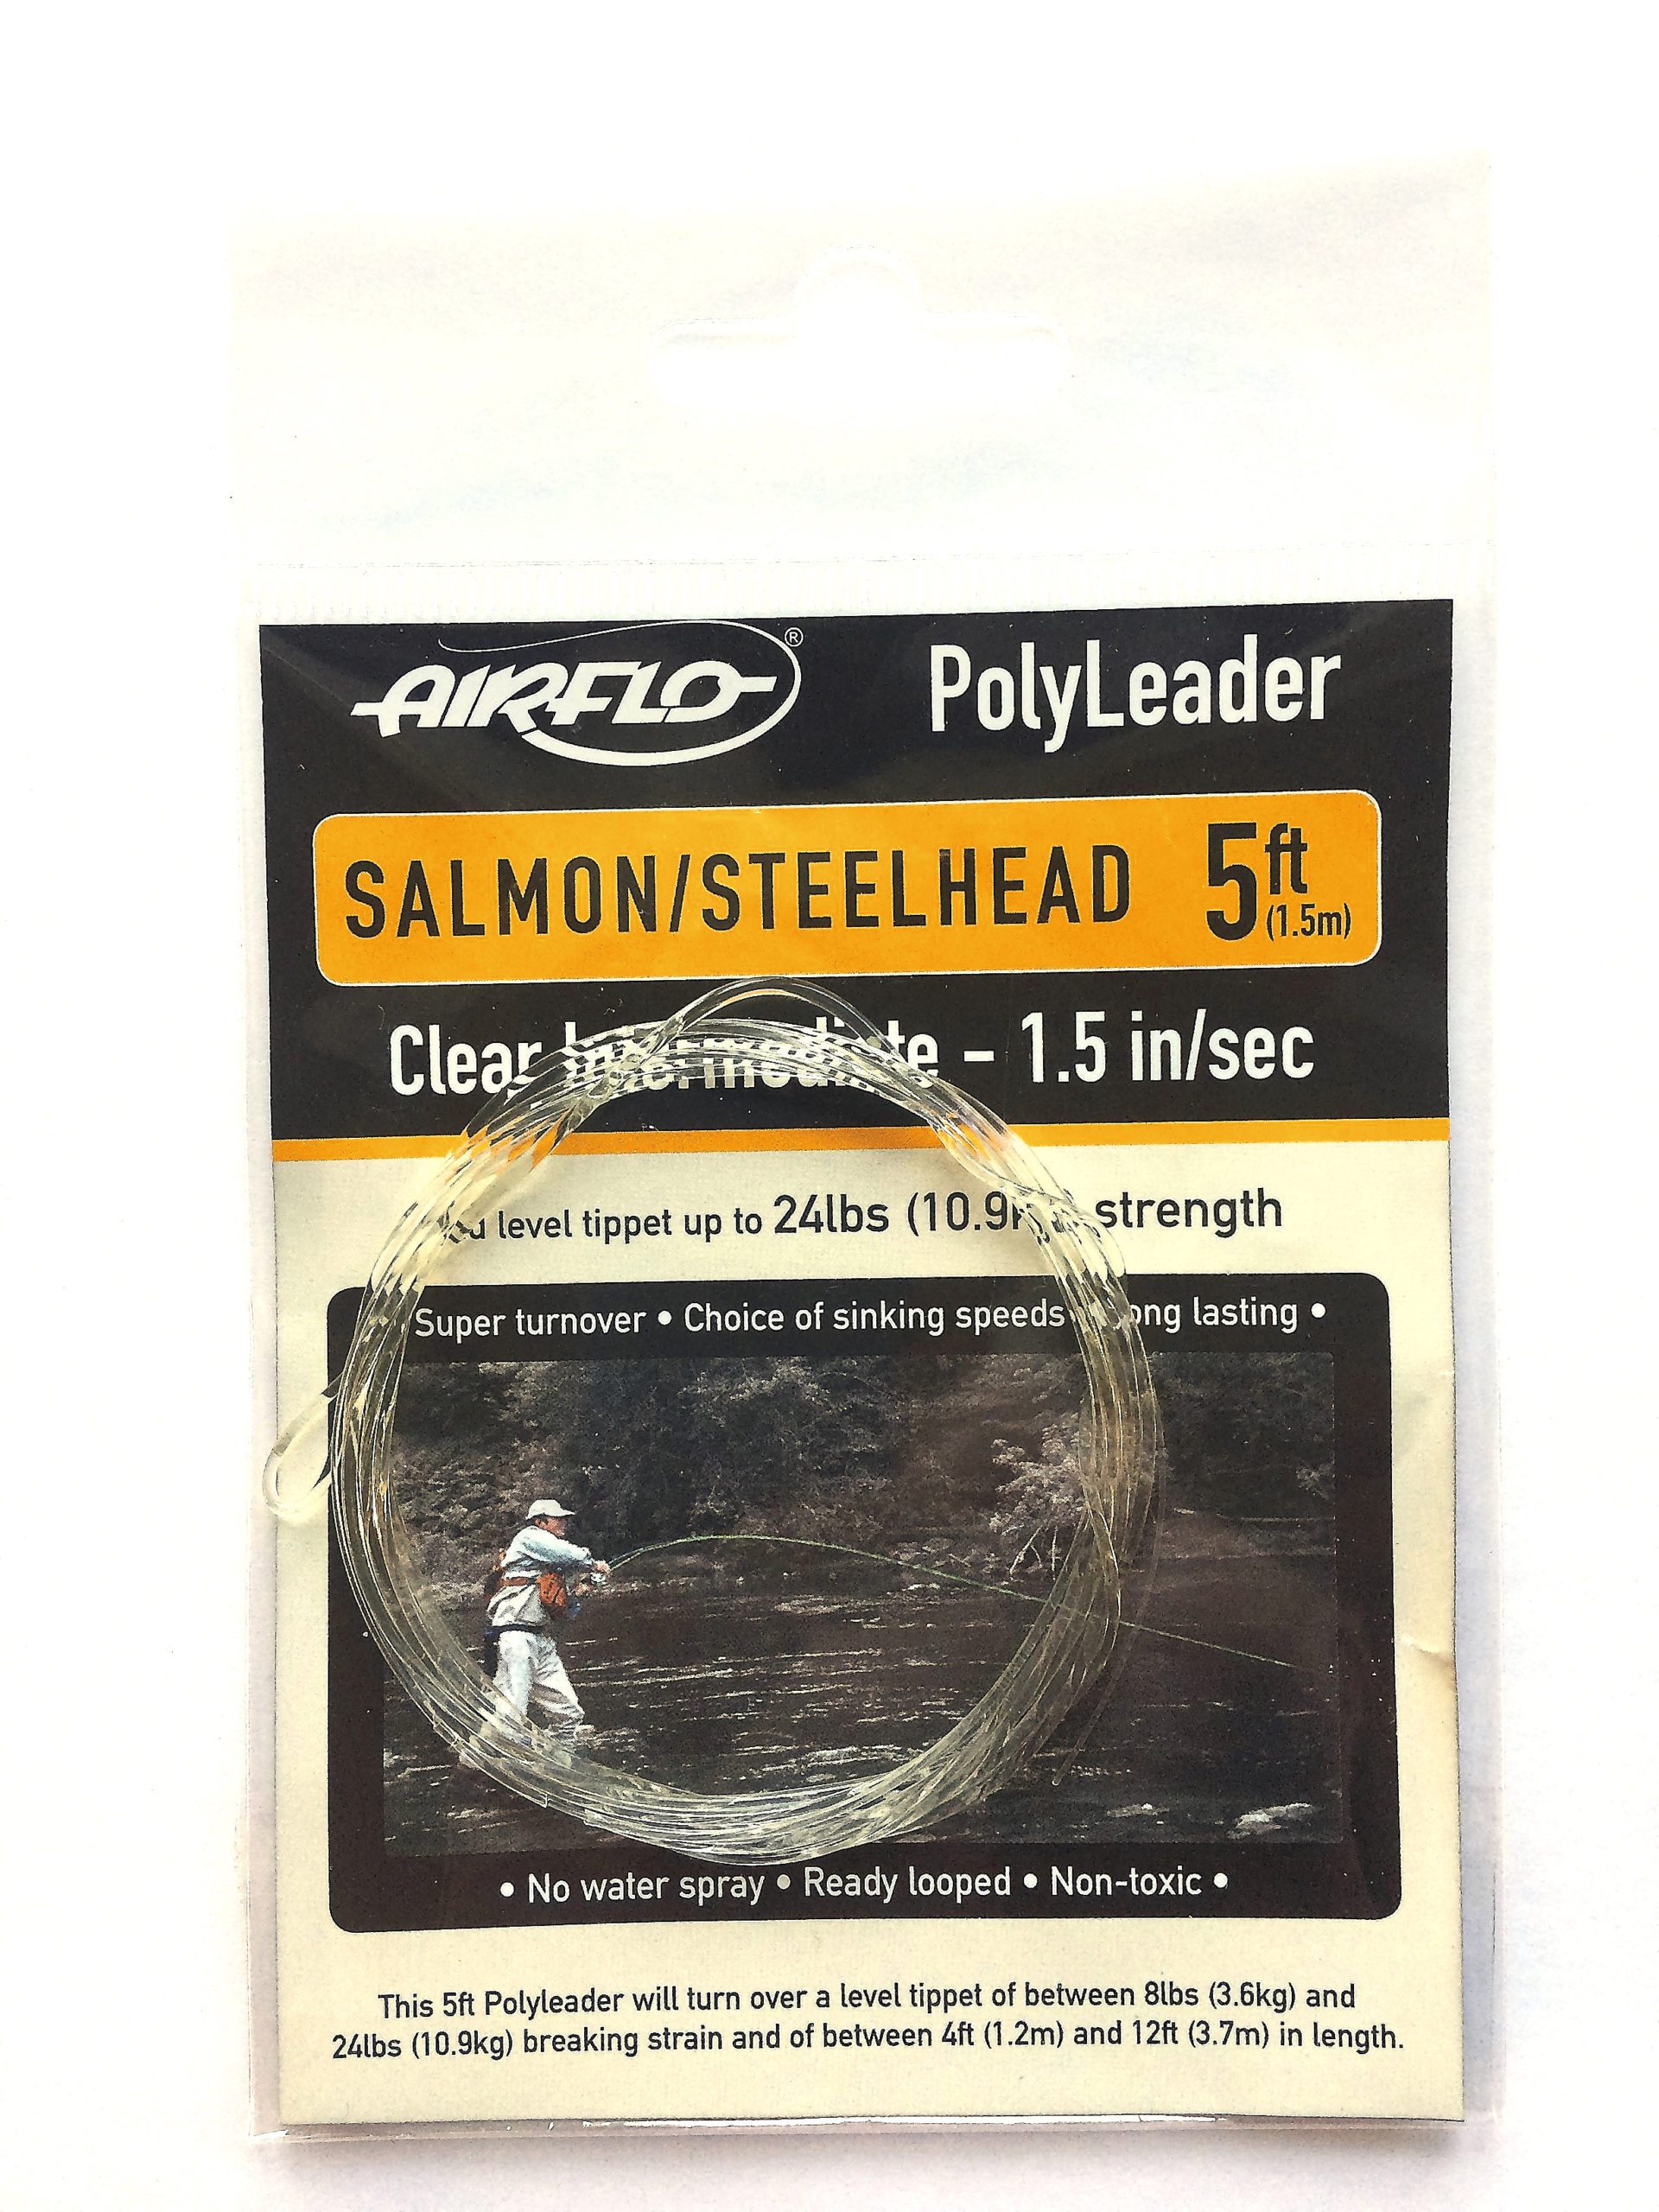 Airflo polyleader Salmon steelhead 5 ft clear intermidiate 1